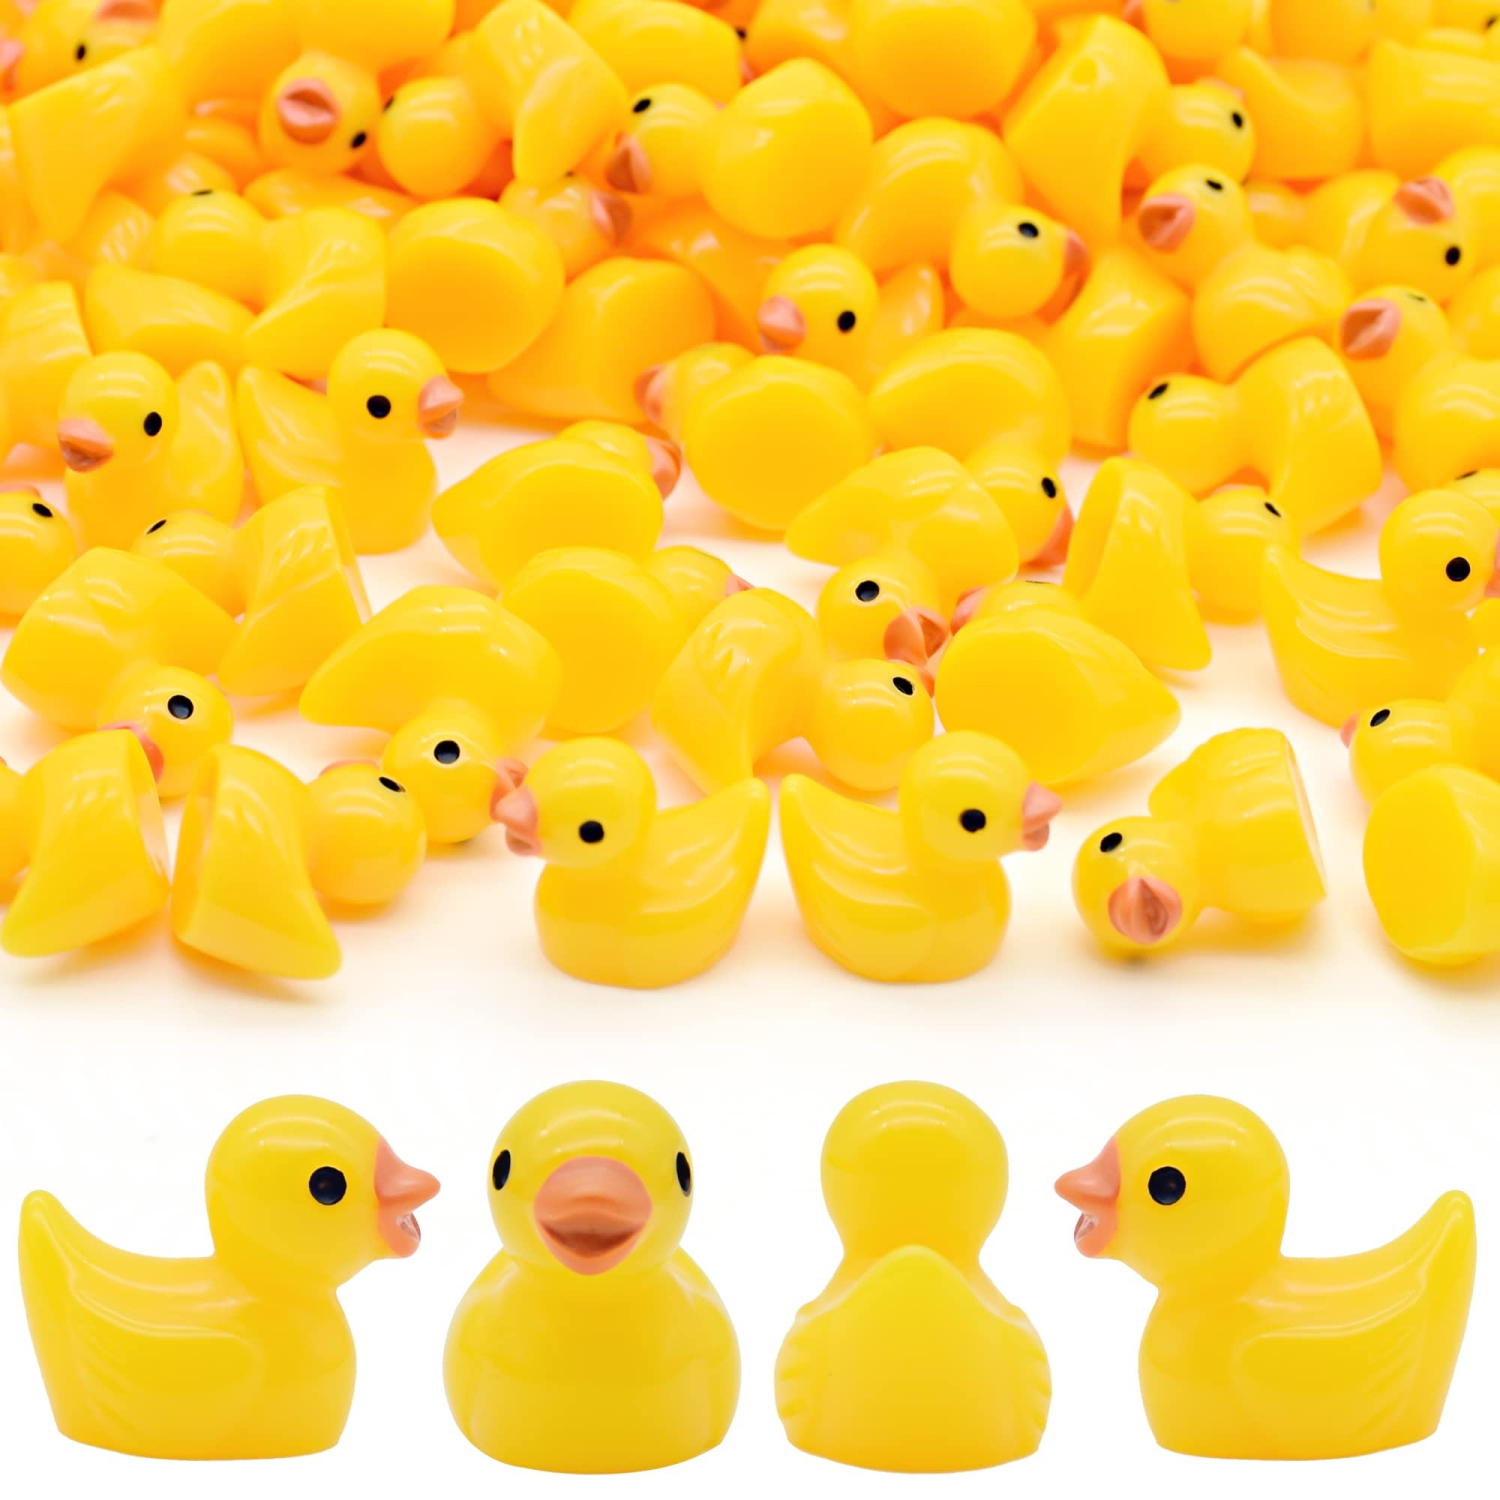 70 Pcs Mini Resin Ducks Miniature Ornaments - Perfect for Slime, Dollhouse, Garden Decoration - Yellow Ducks